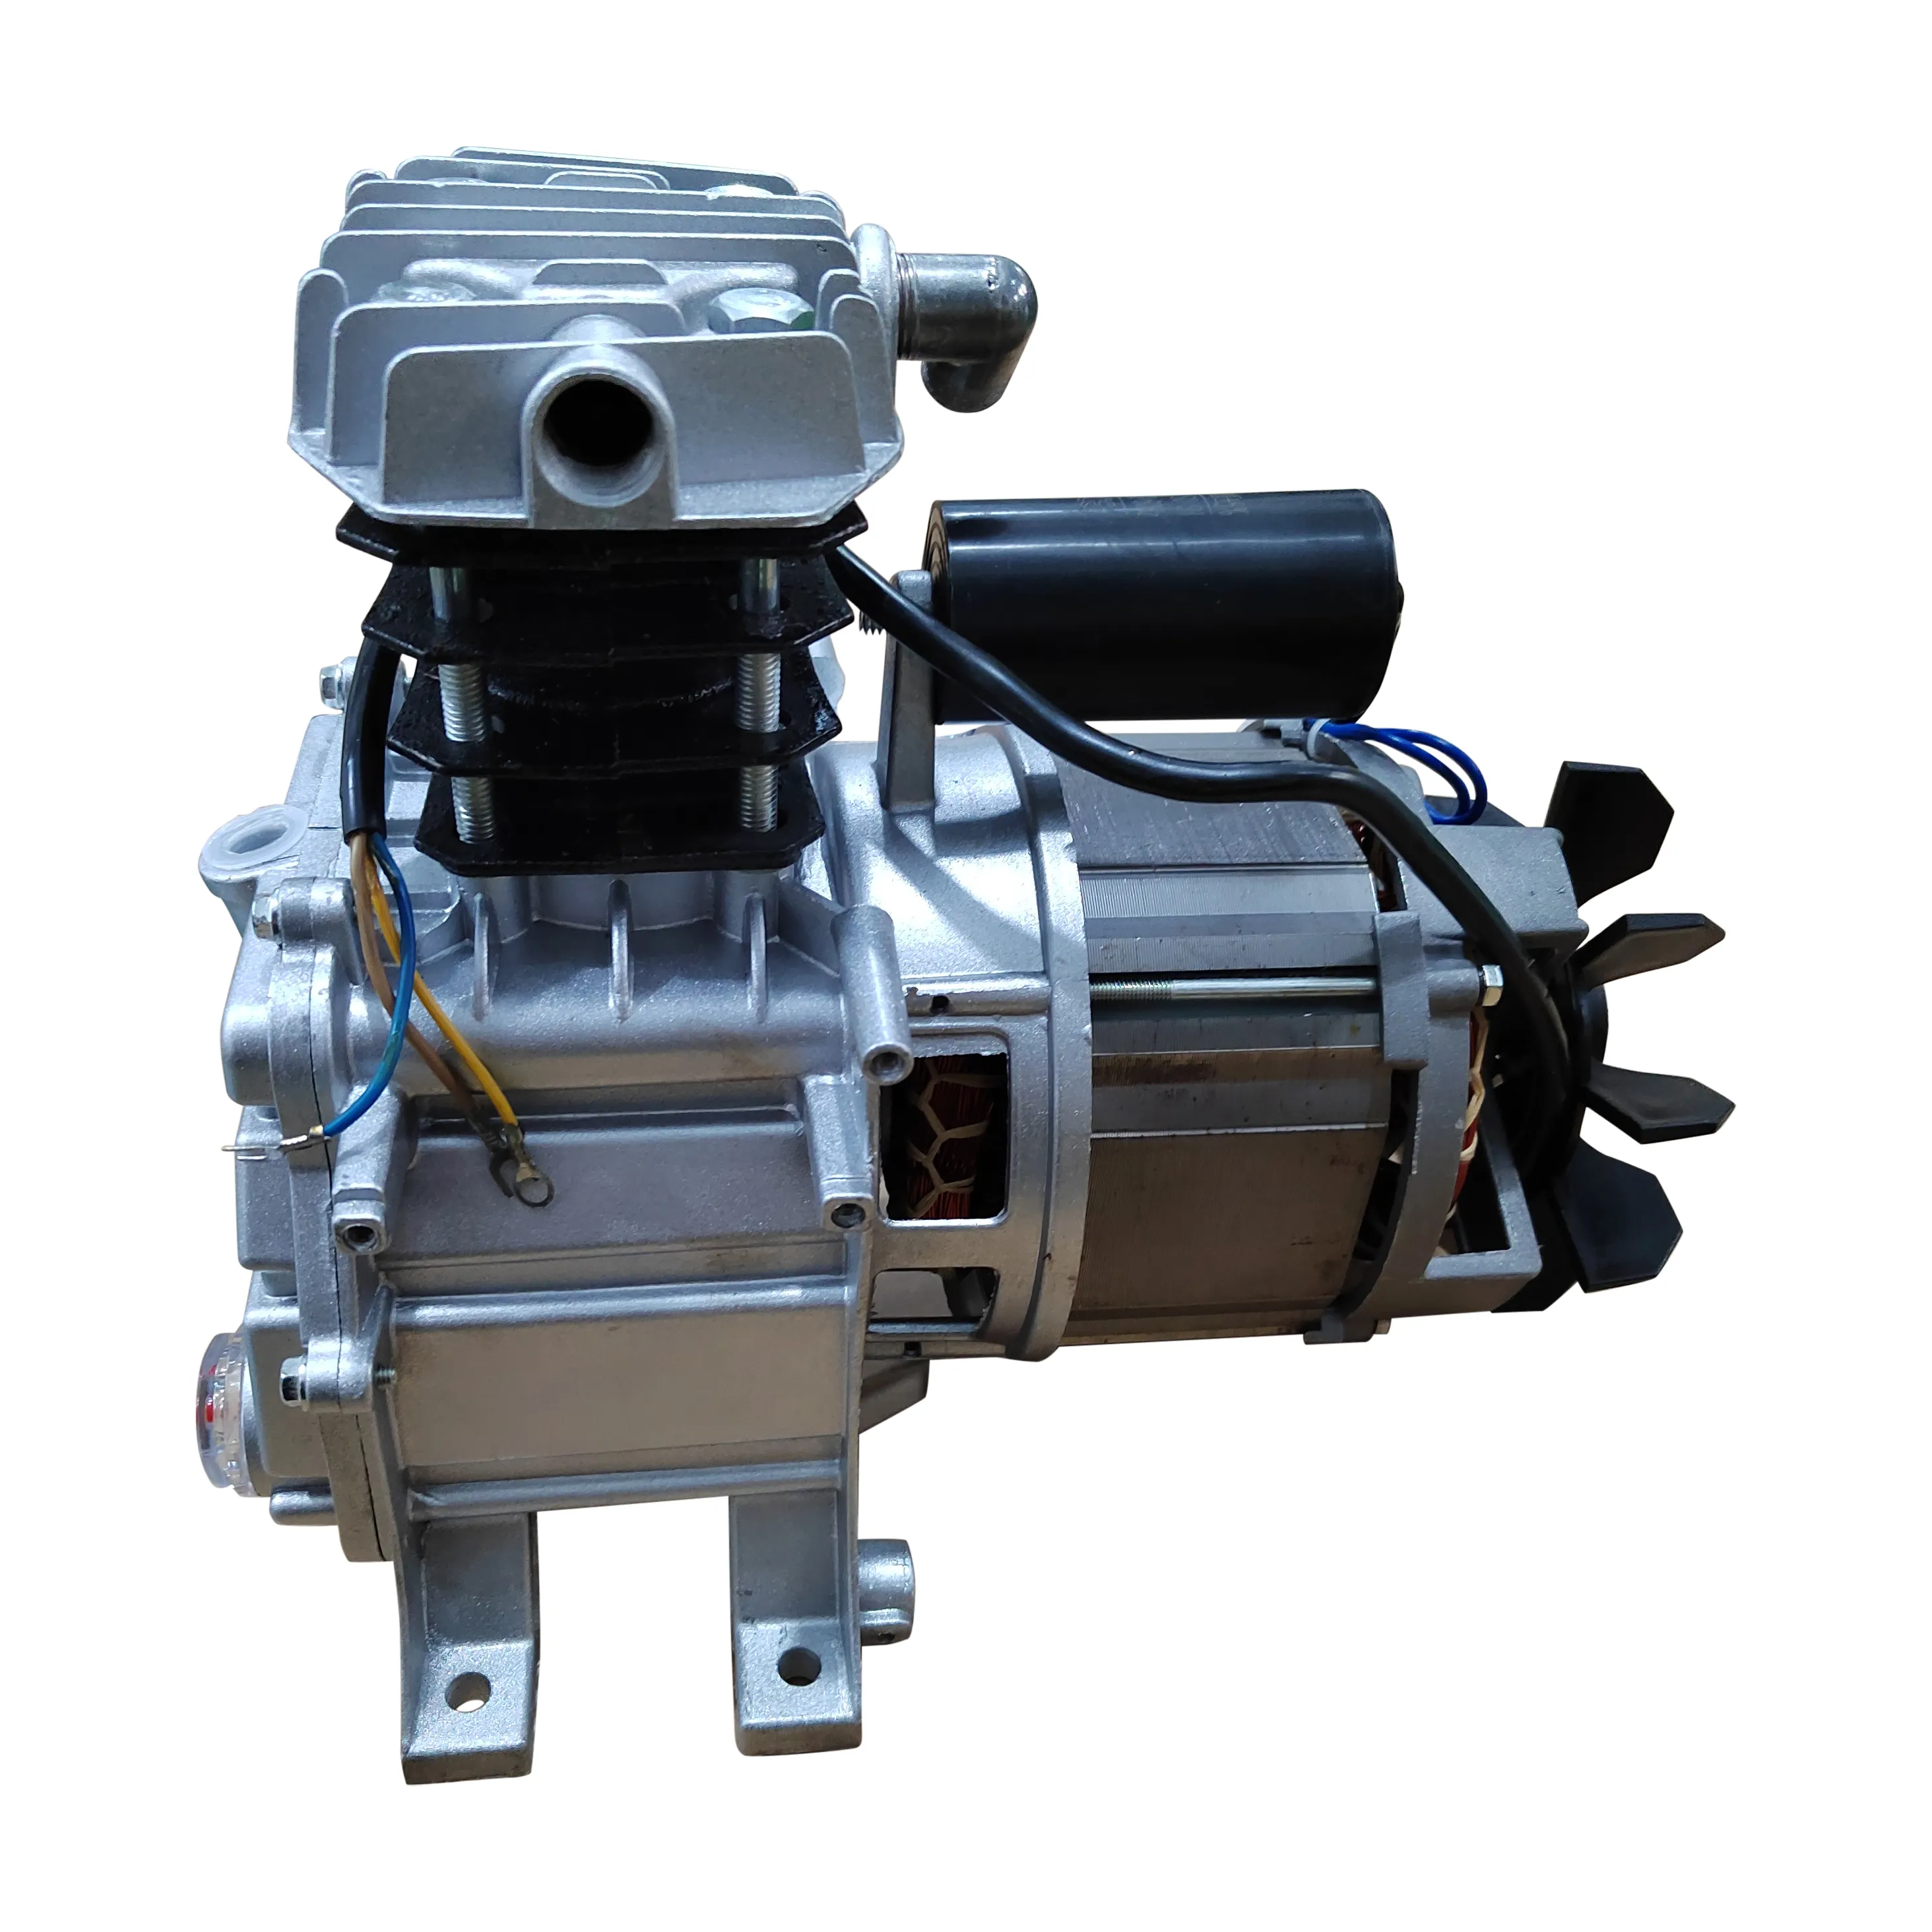 Hoge Capaciteit Luchtcompressor Pomp Hoofd 3hp Motor Olie Gratis Luchtcompressor Pomp Machines Luchtpomp 1,5 Kw 2hp Cilinder 47Mm